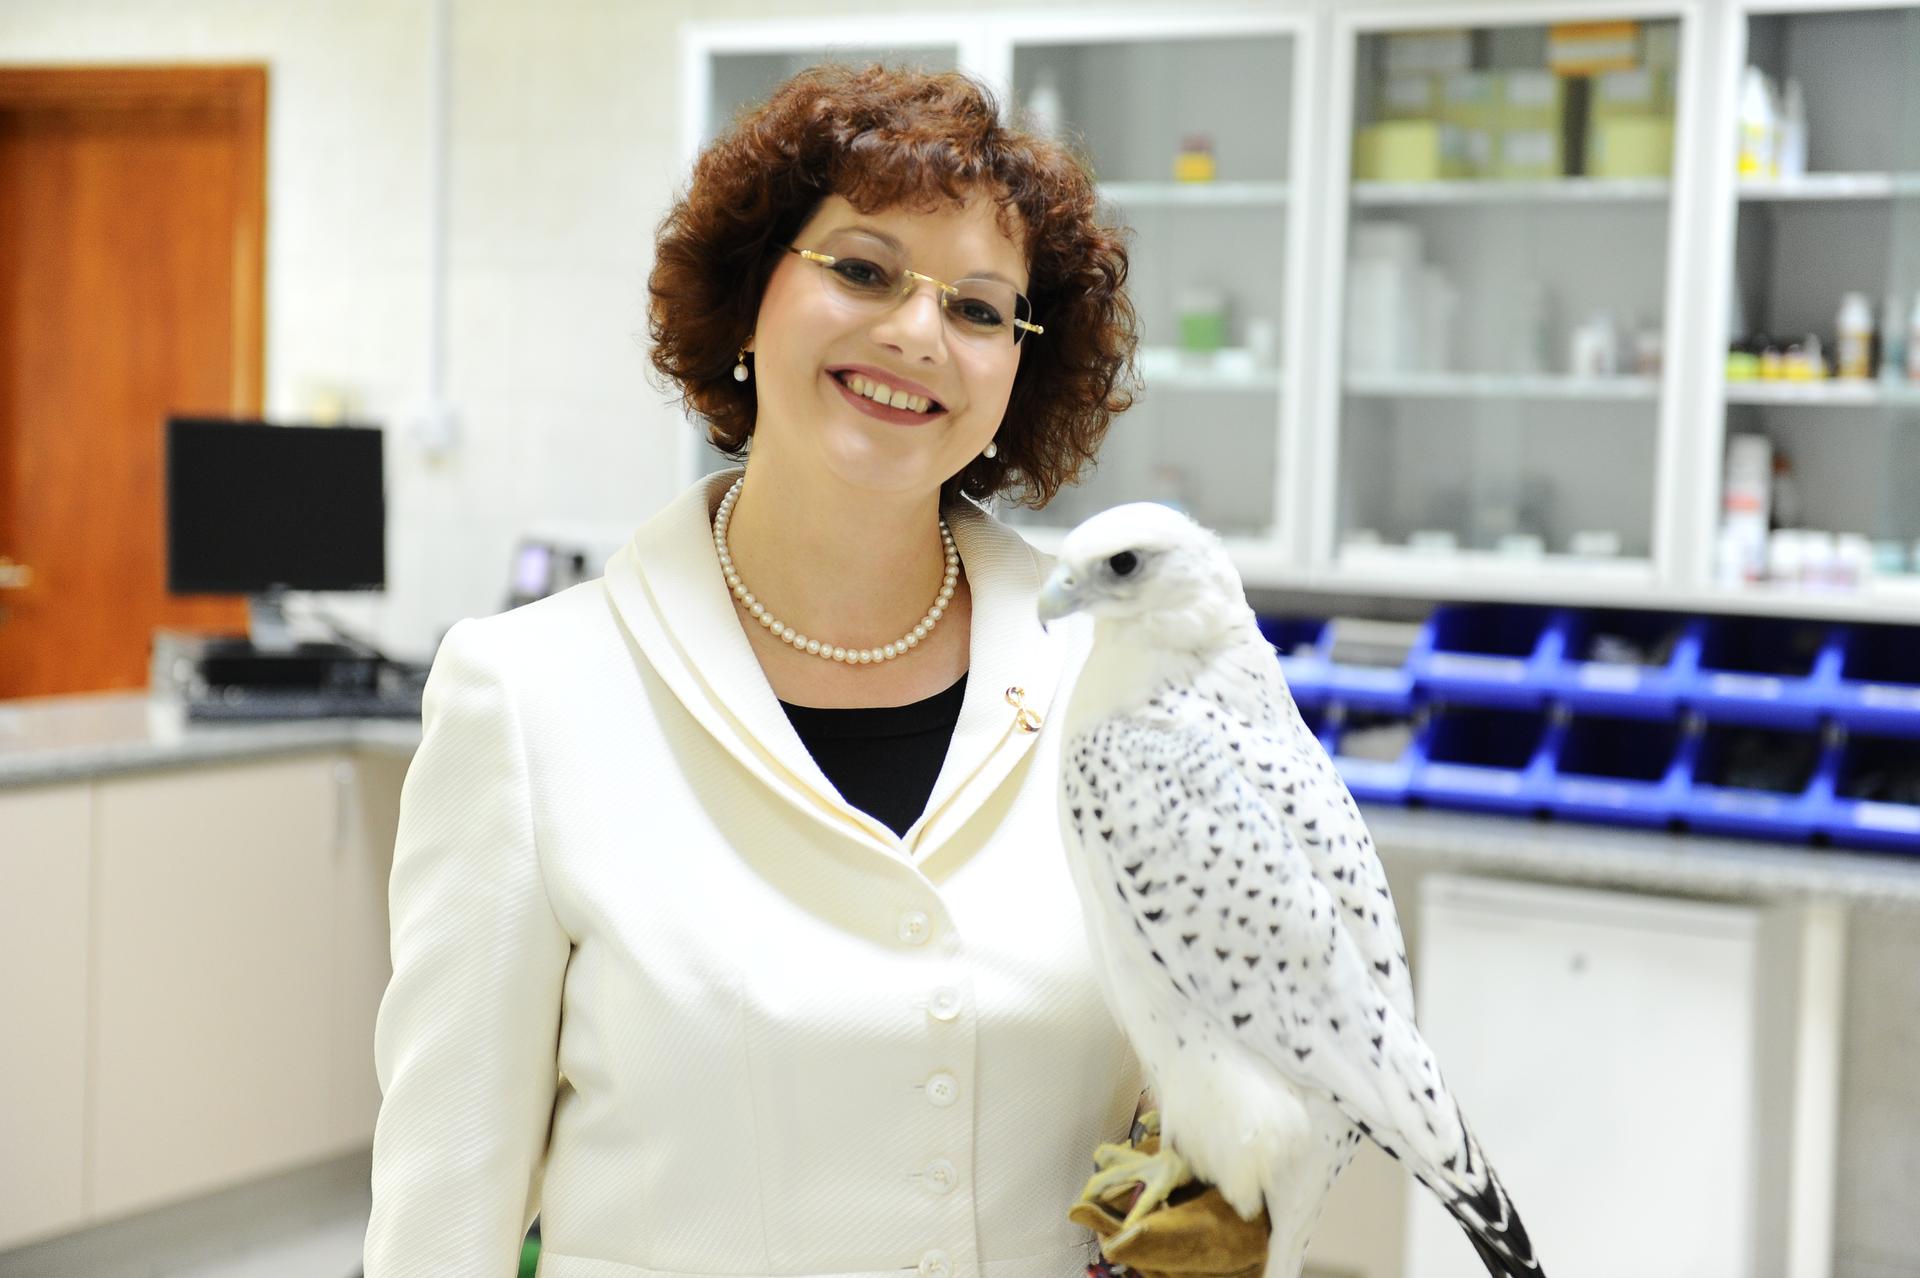 Dr. Margit Gabriele Muller at the Abu Dhabi Falcon Hospital.